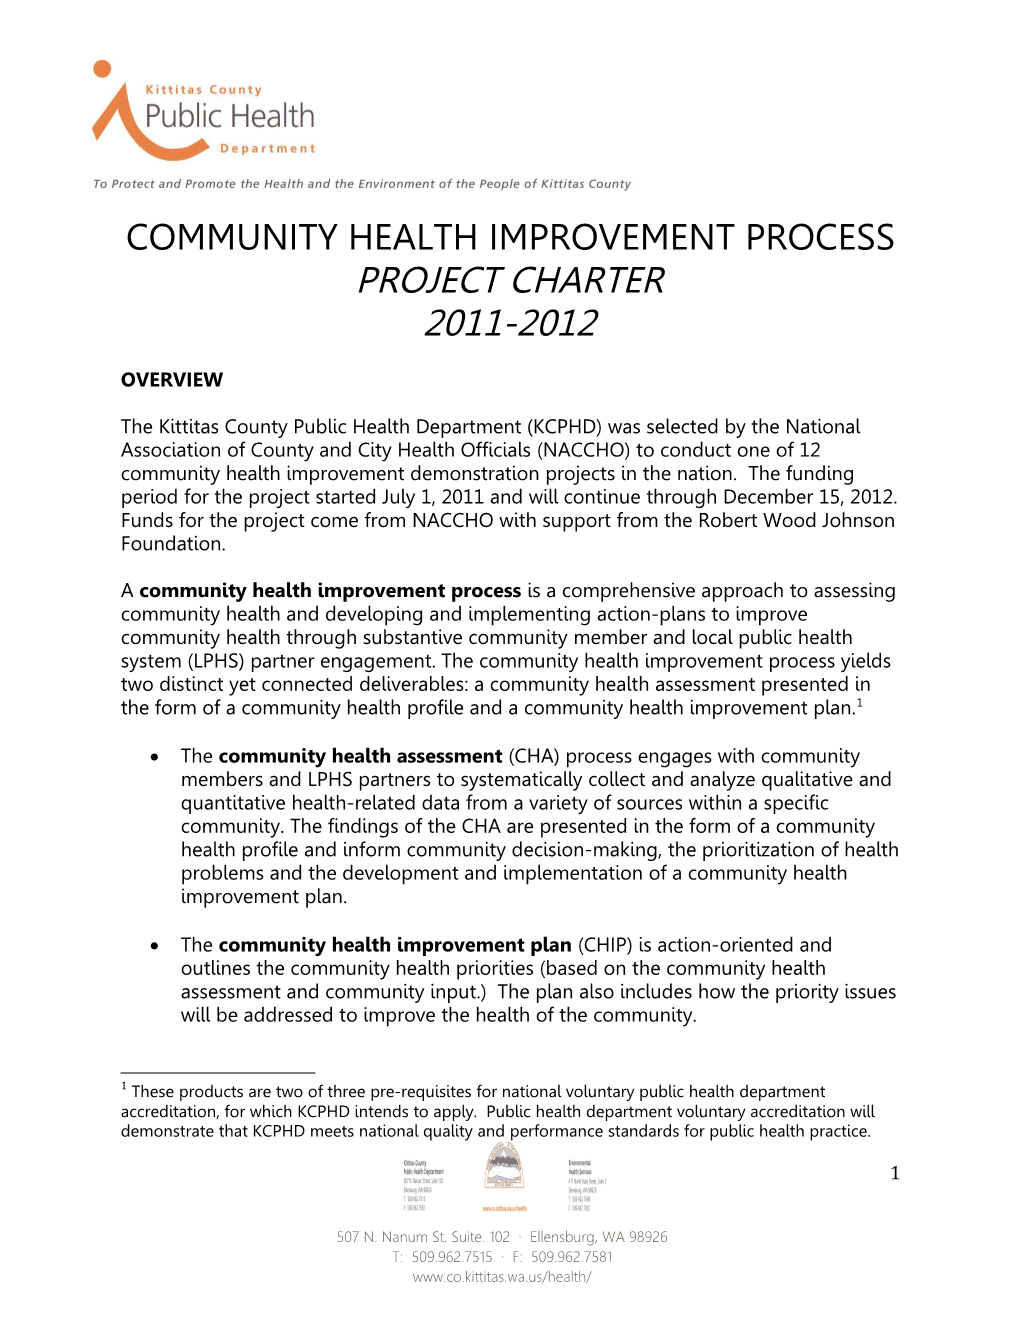 Community Health Improvement Process